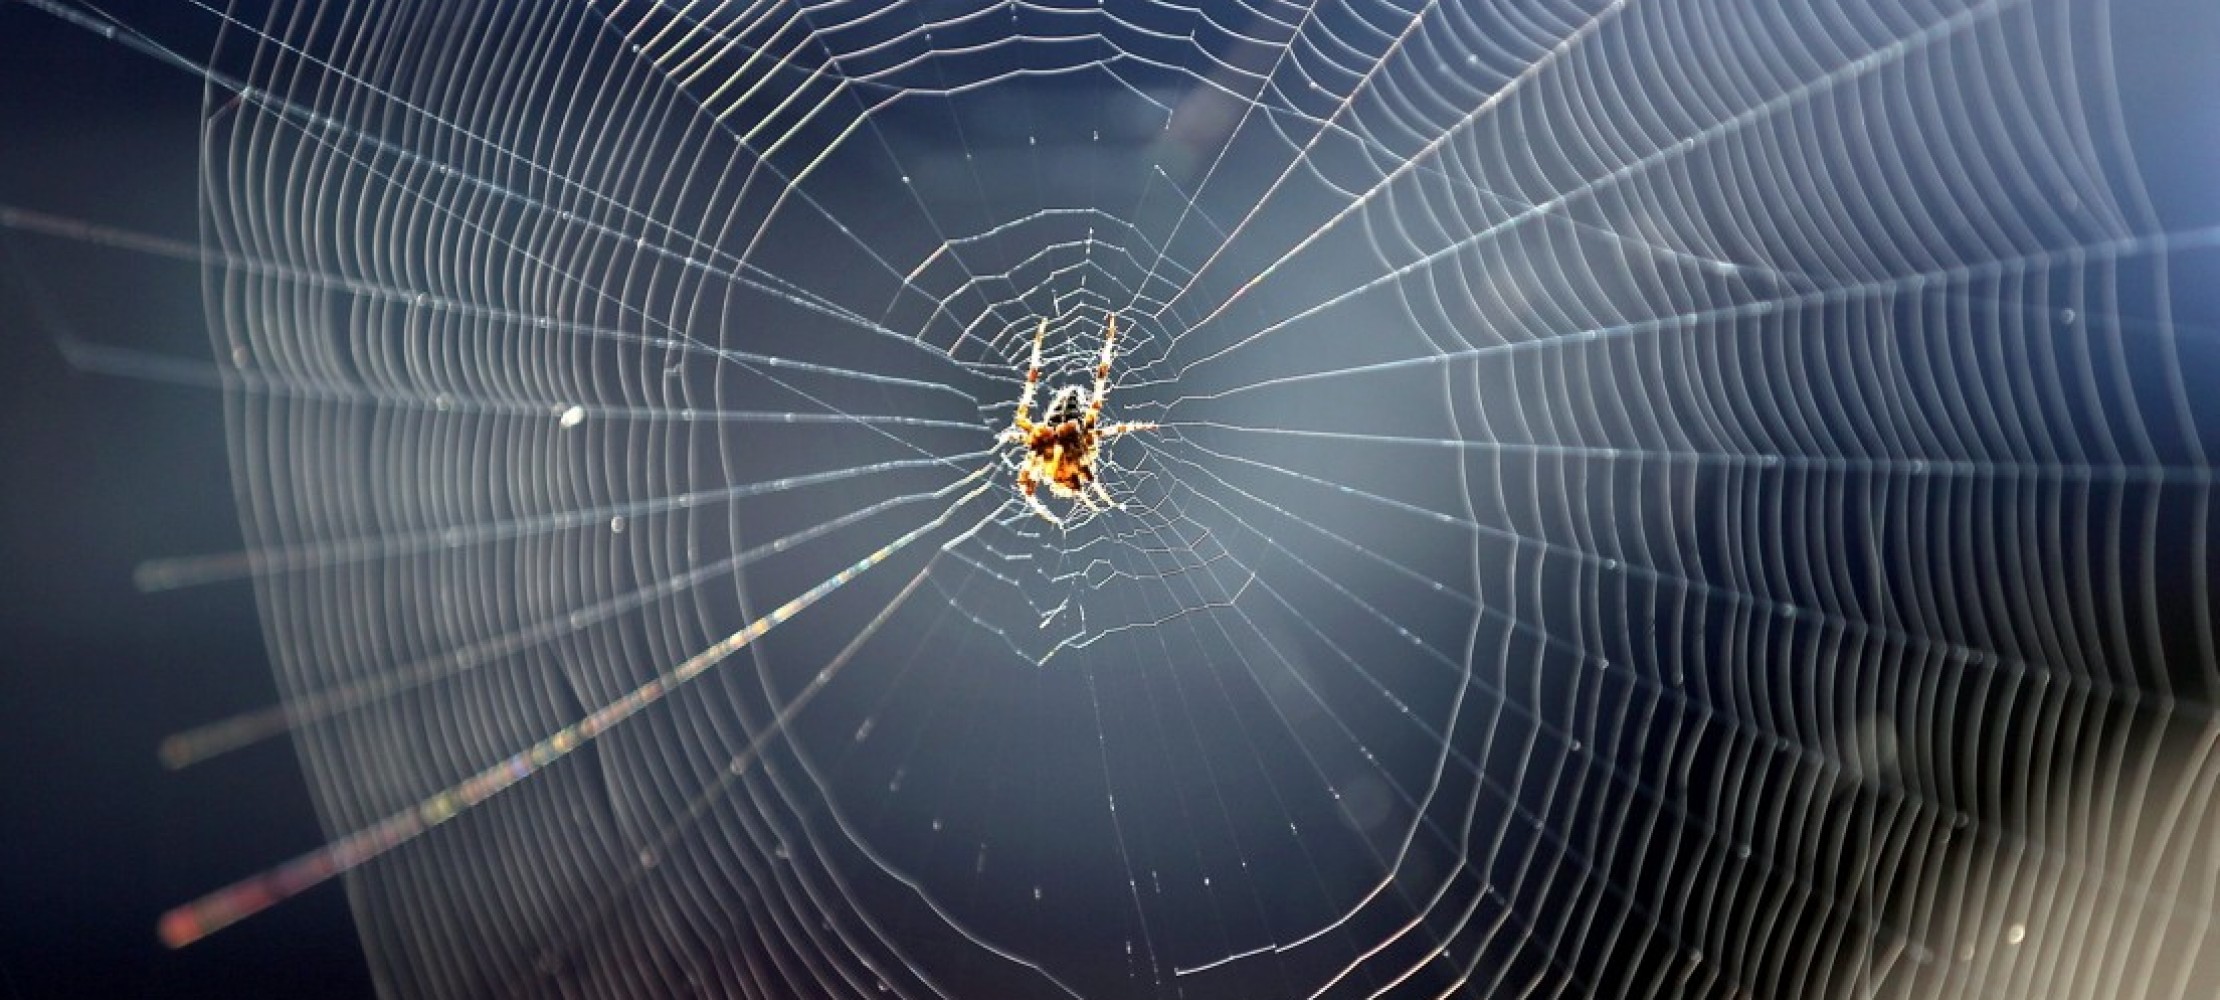 kennenlernen spinnennetz)